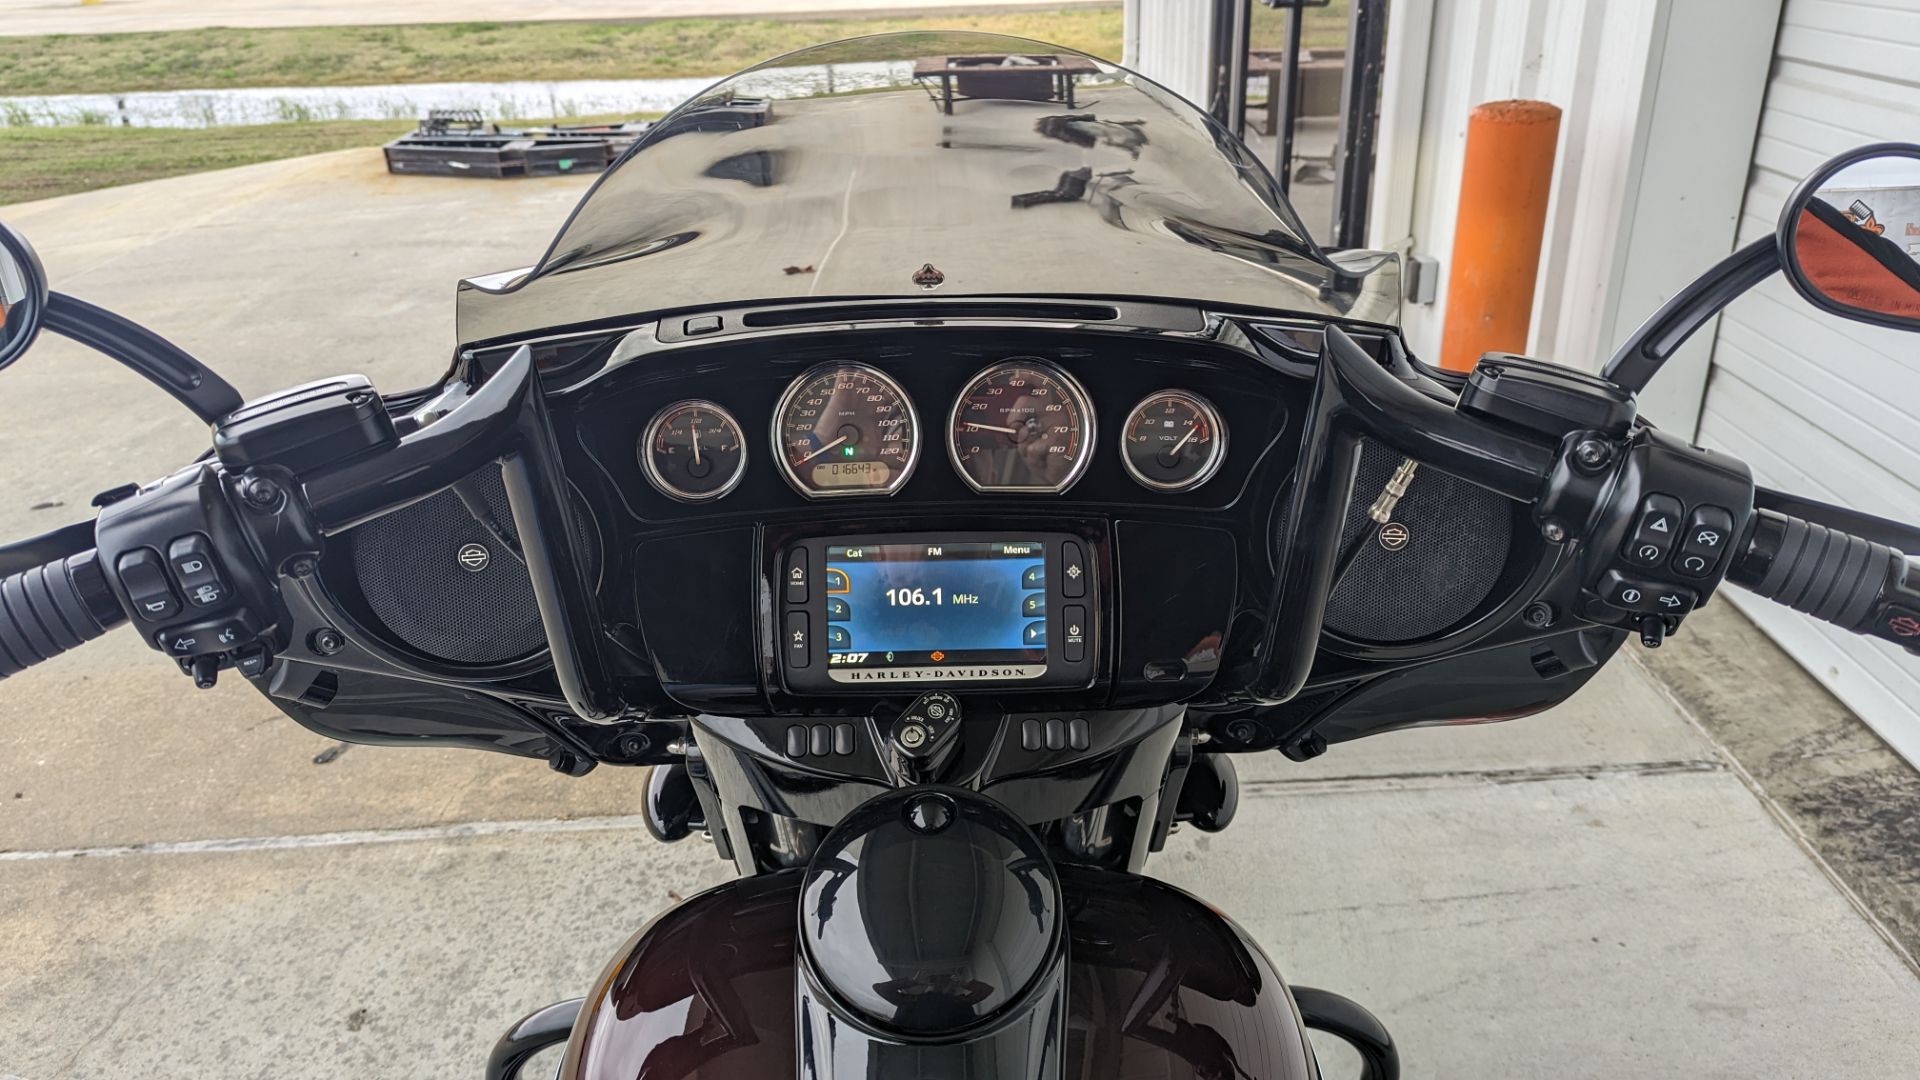 2018 Harley-Davidson Street Glide® Special in Monroe, Louisiana - Photo 12